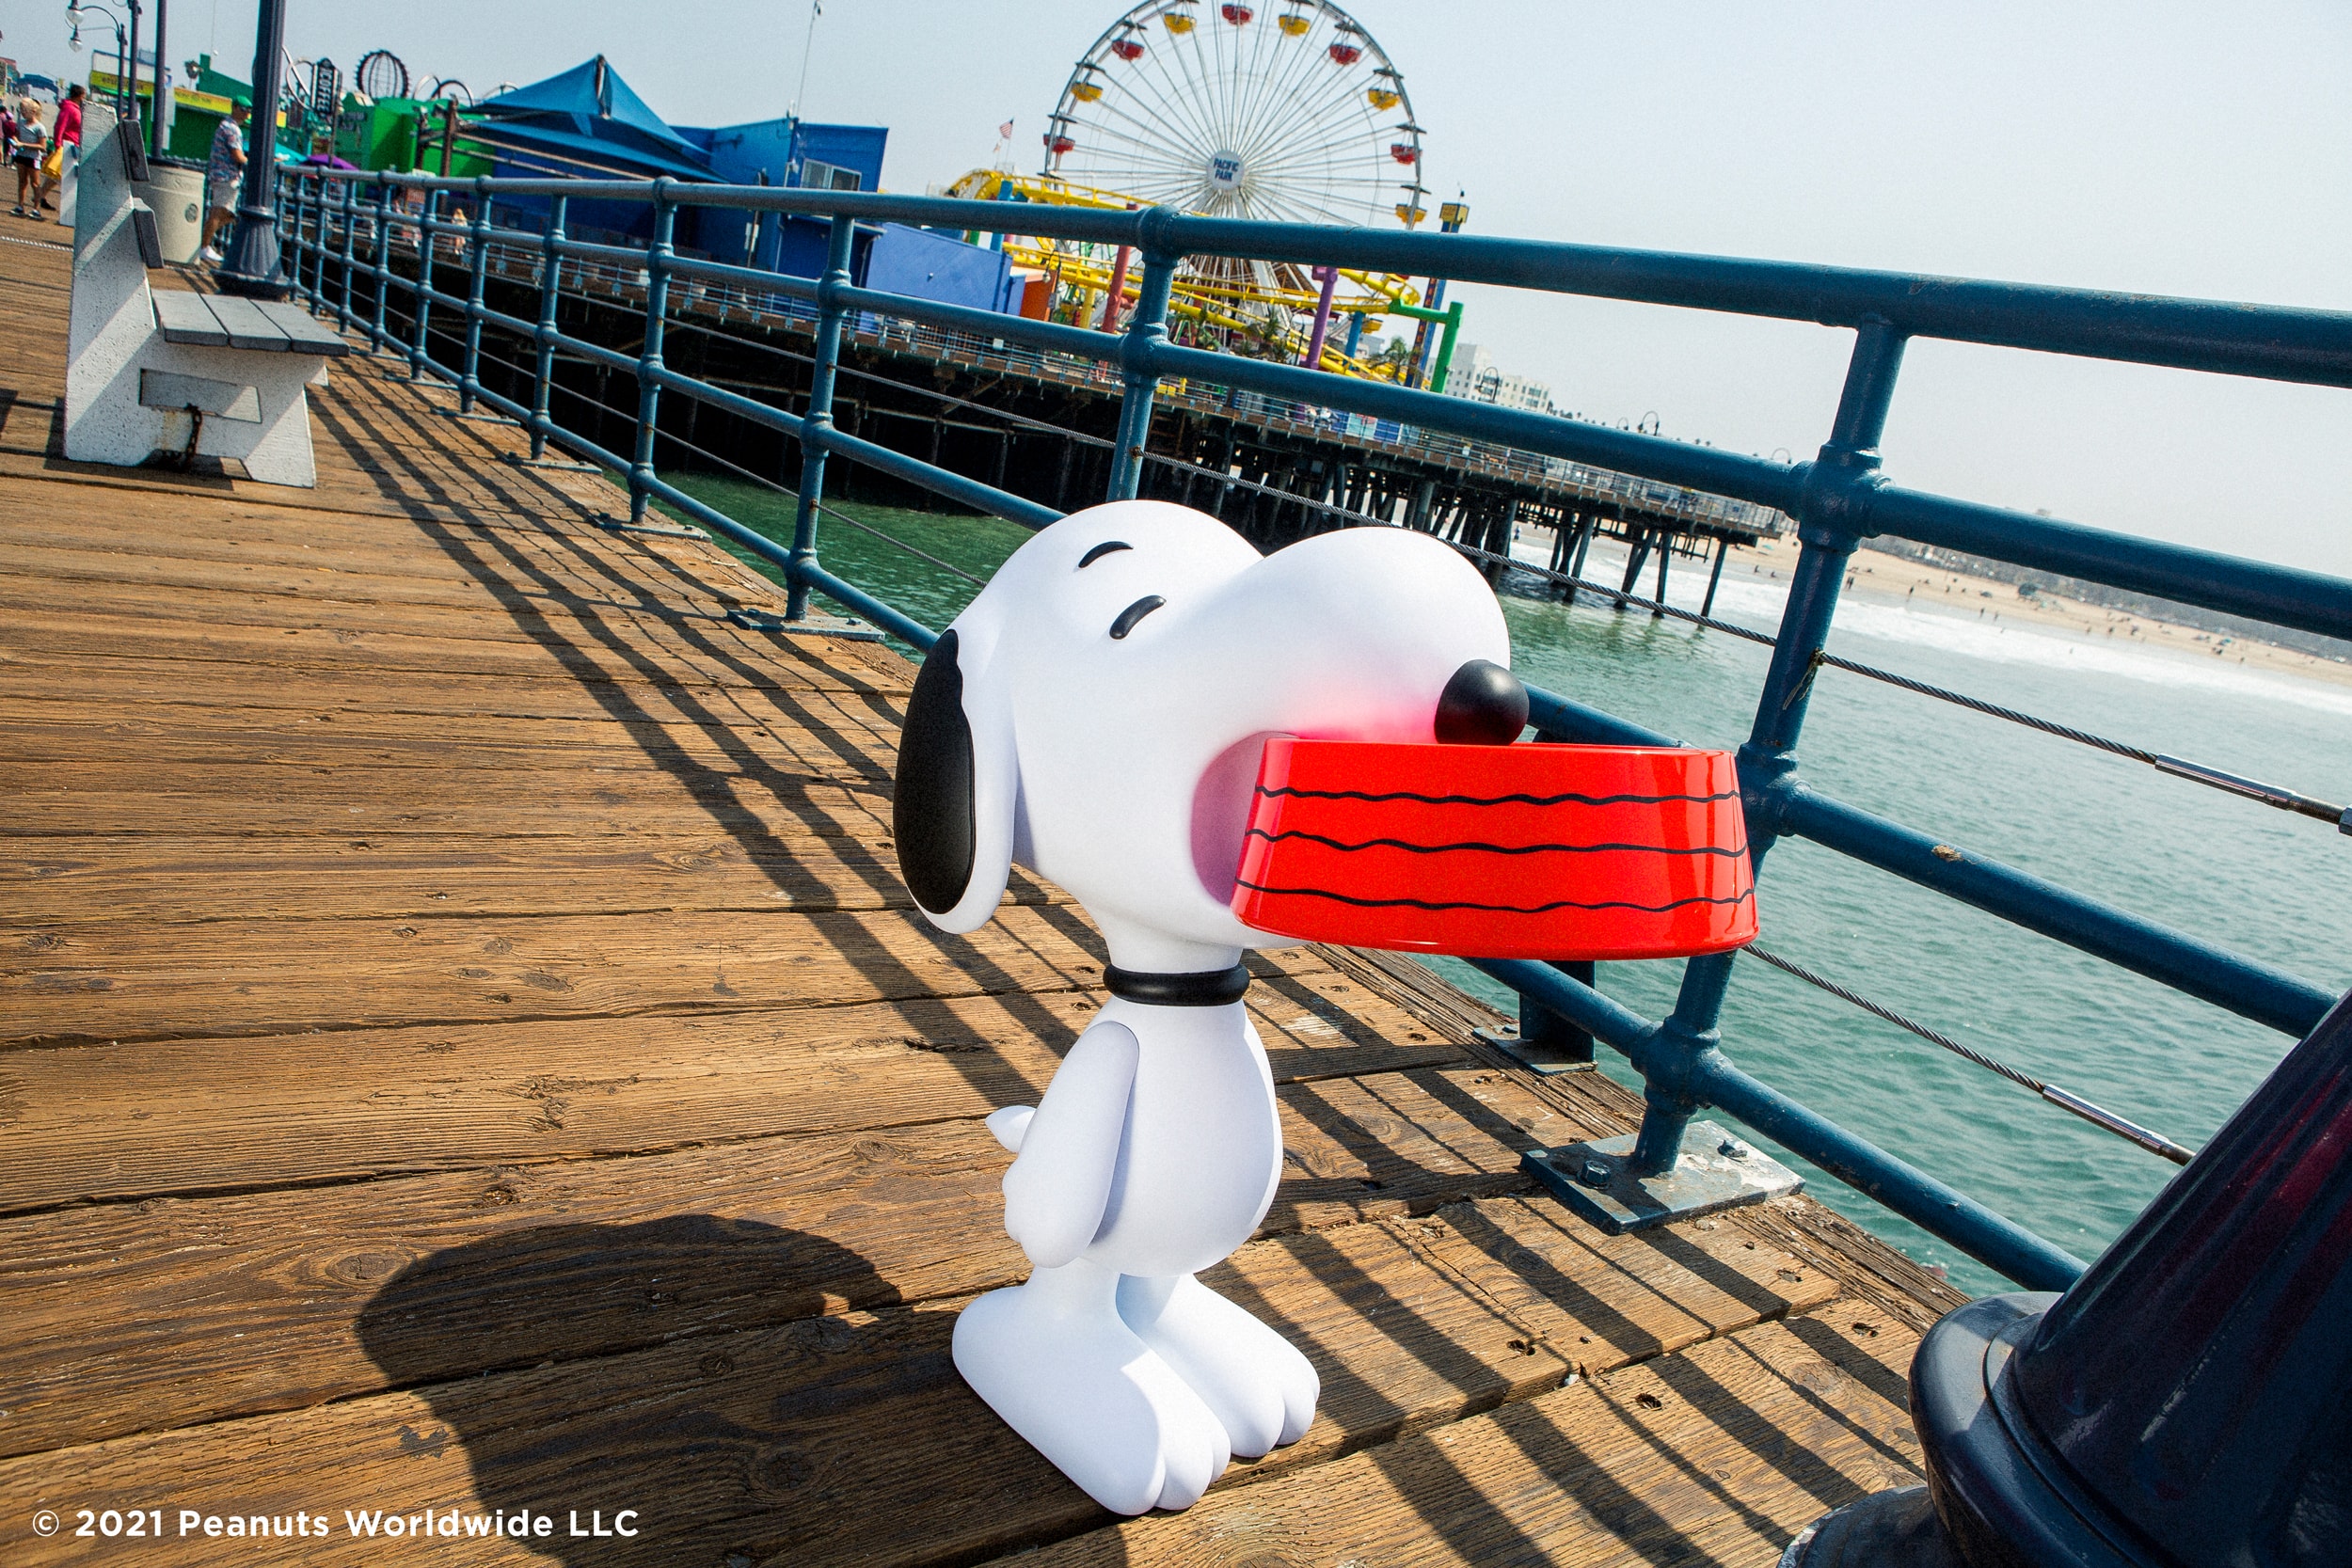 Snoopy x Objective Collectibles x Medicom Toy 聯乘「1:1 真實尺寸 Snoopy 雕塑」登場